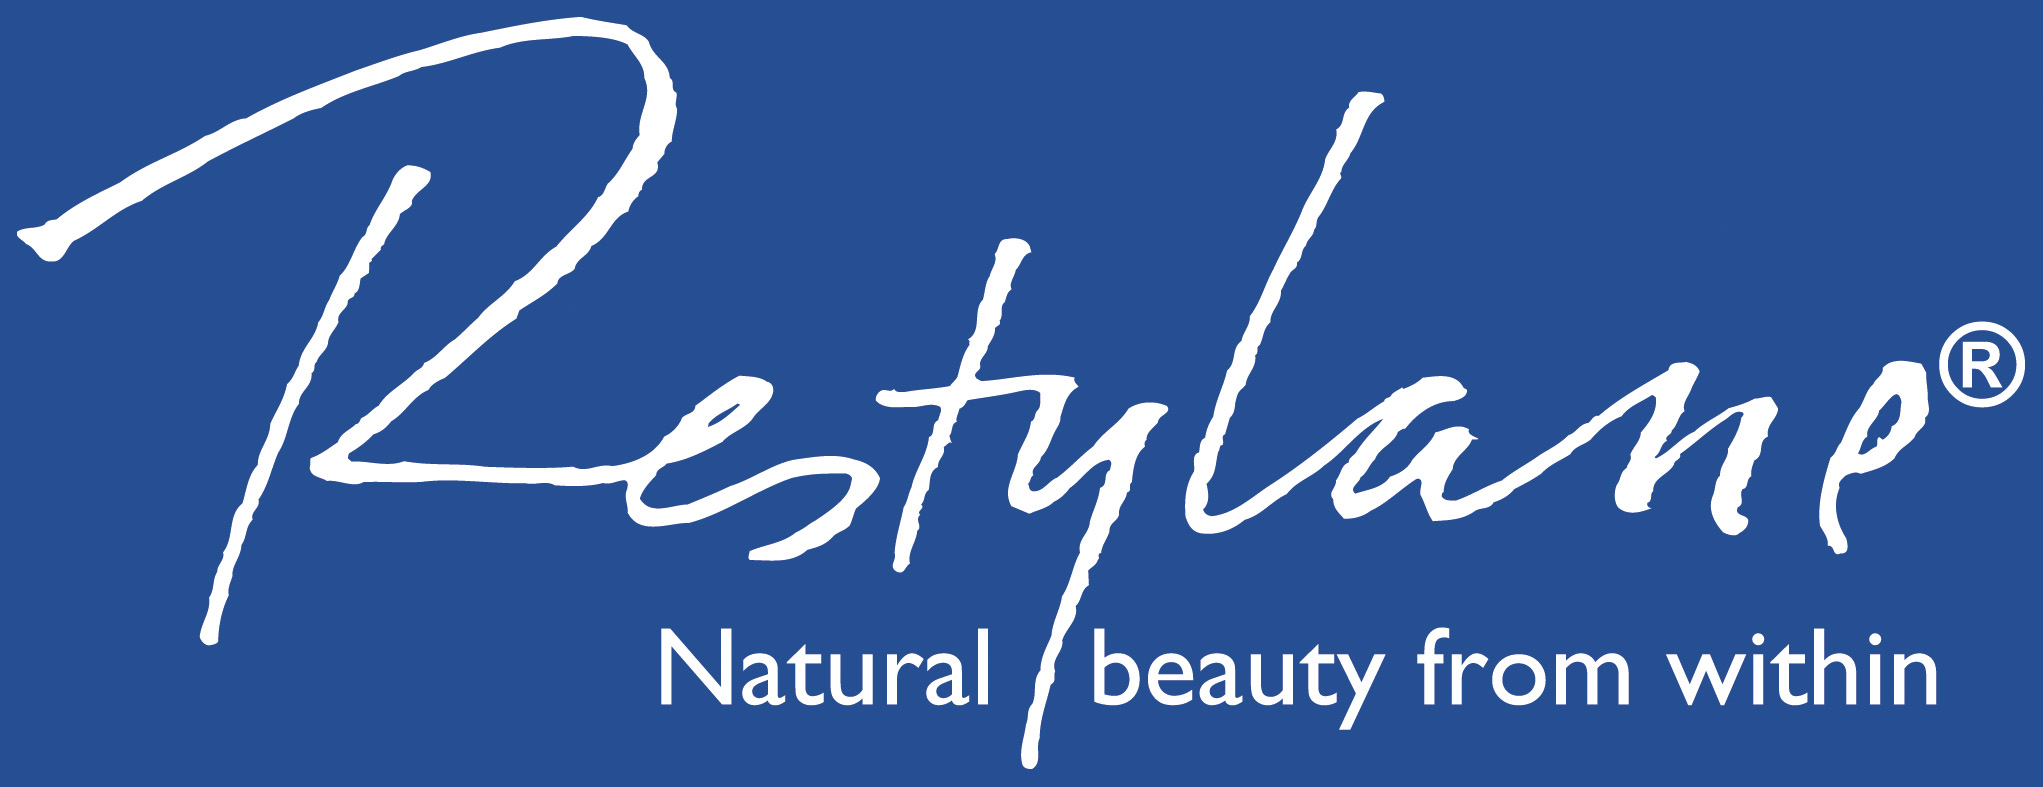 Restylane Logo photo - 1